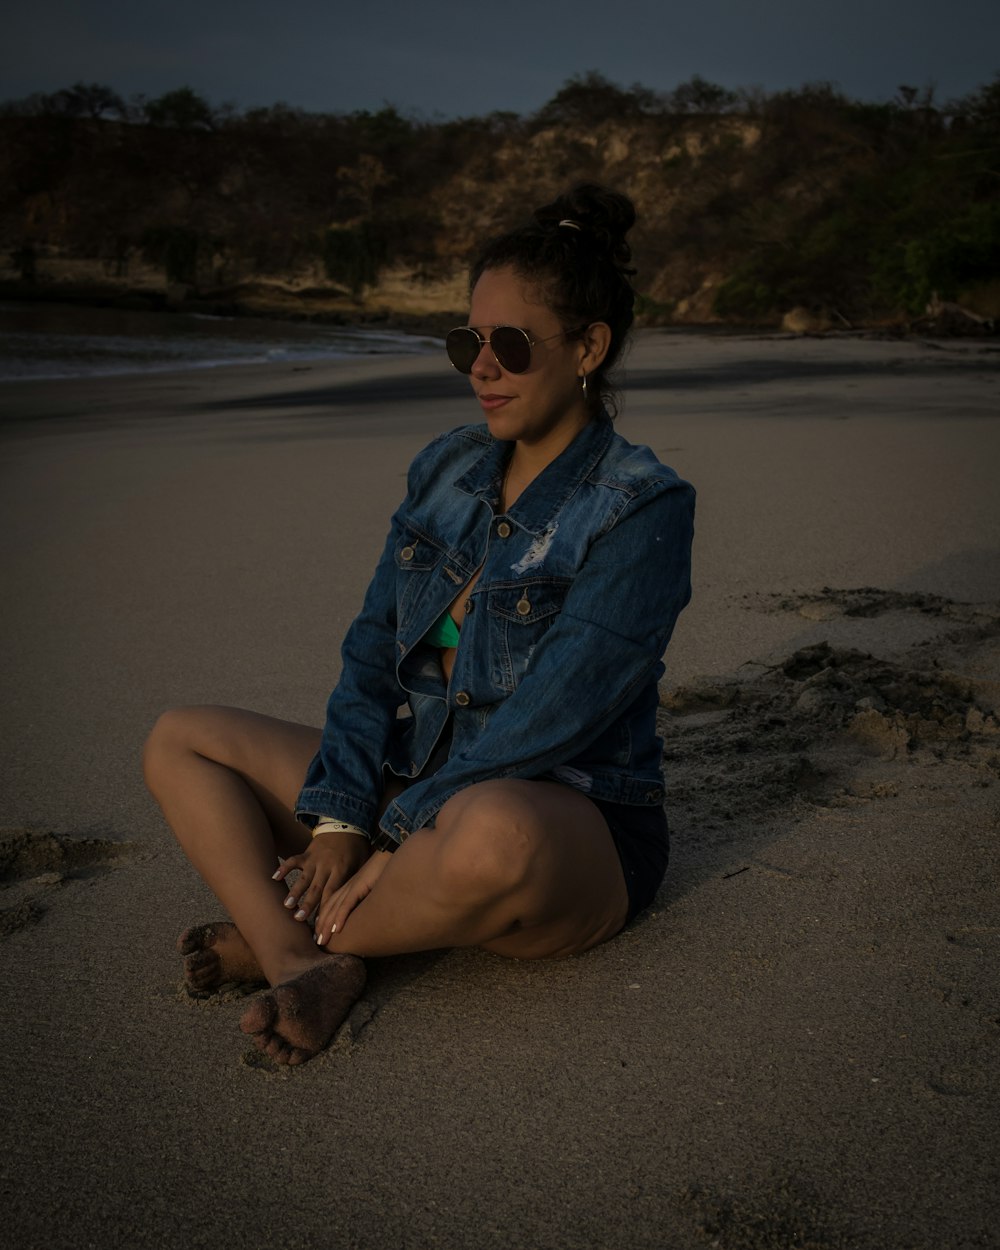 woman sitting on sand near seashore